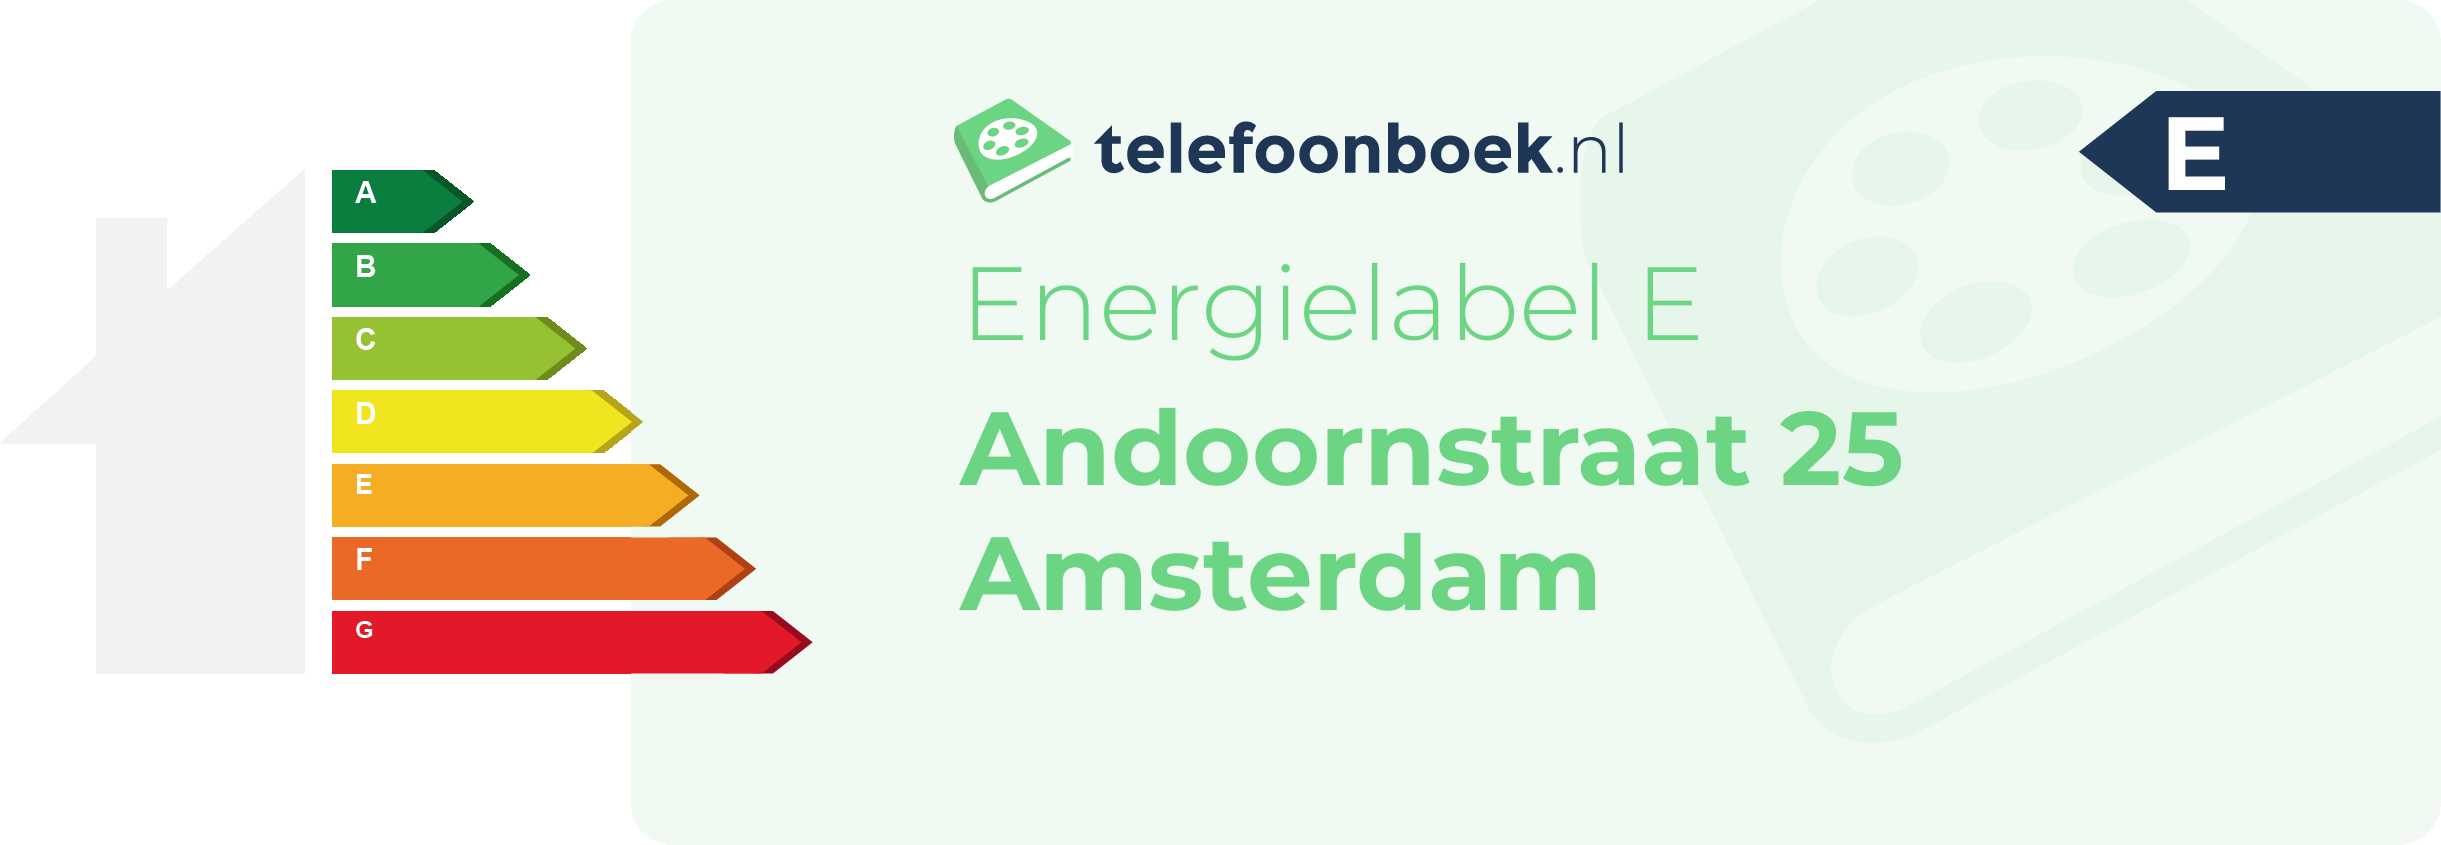 Energielabel Andoornstraat 25 Amsterdam